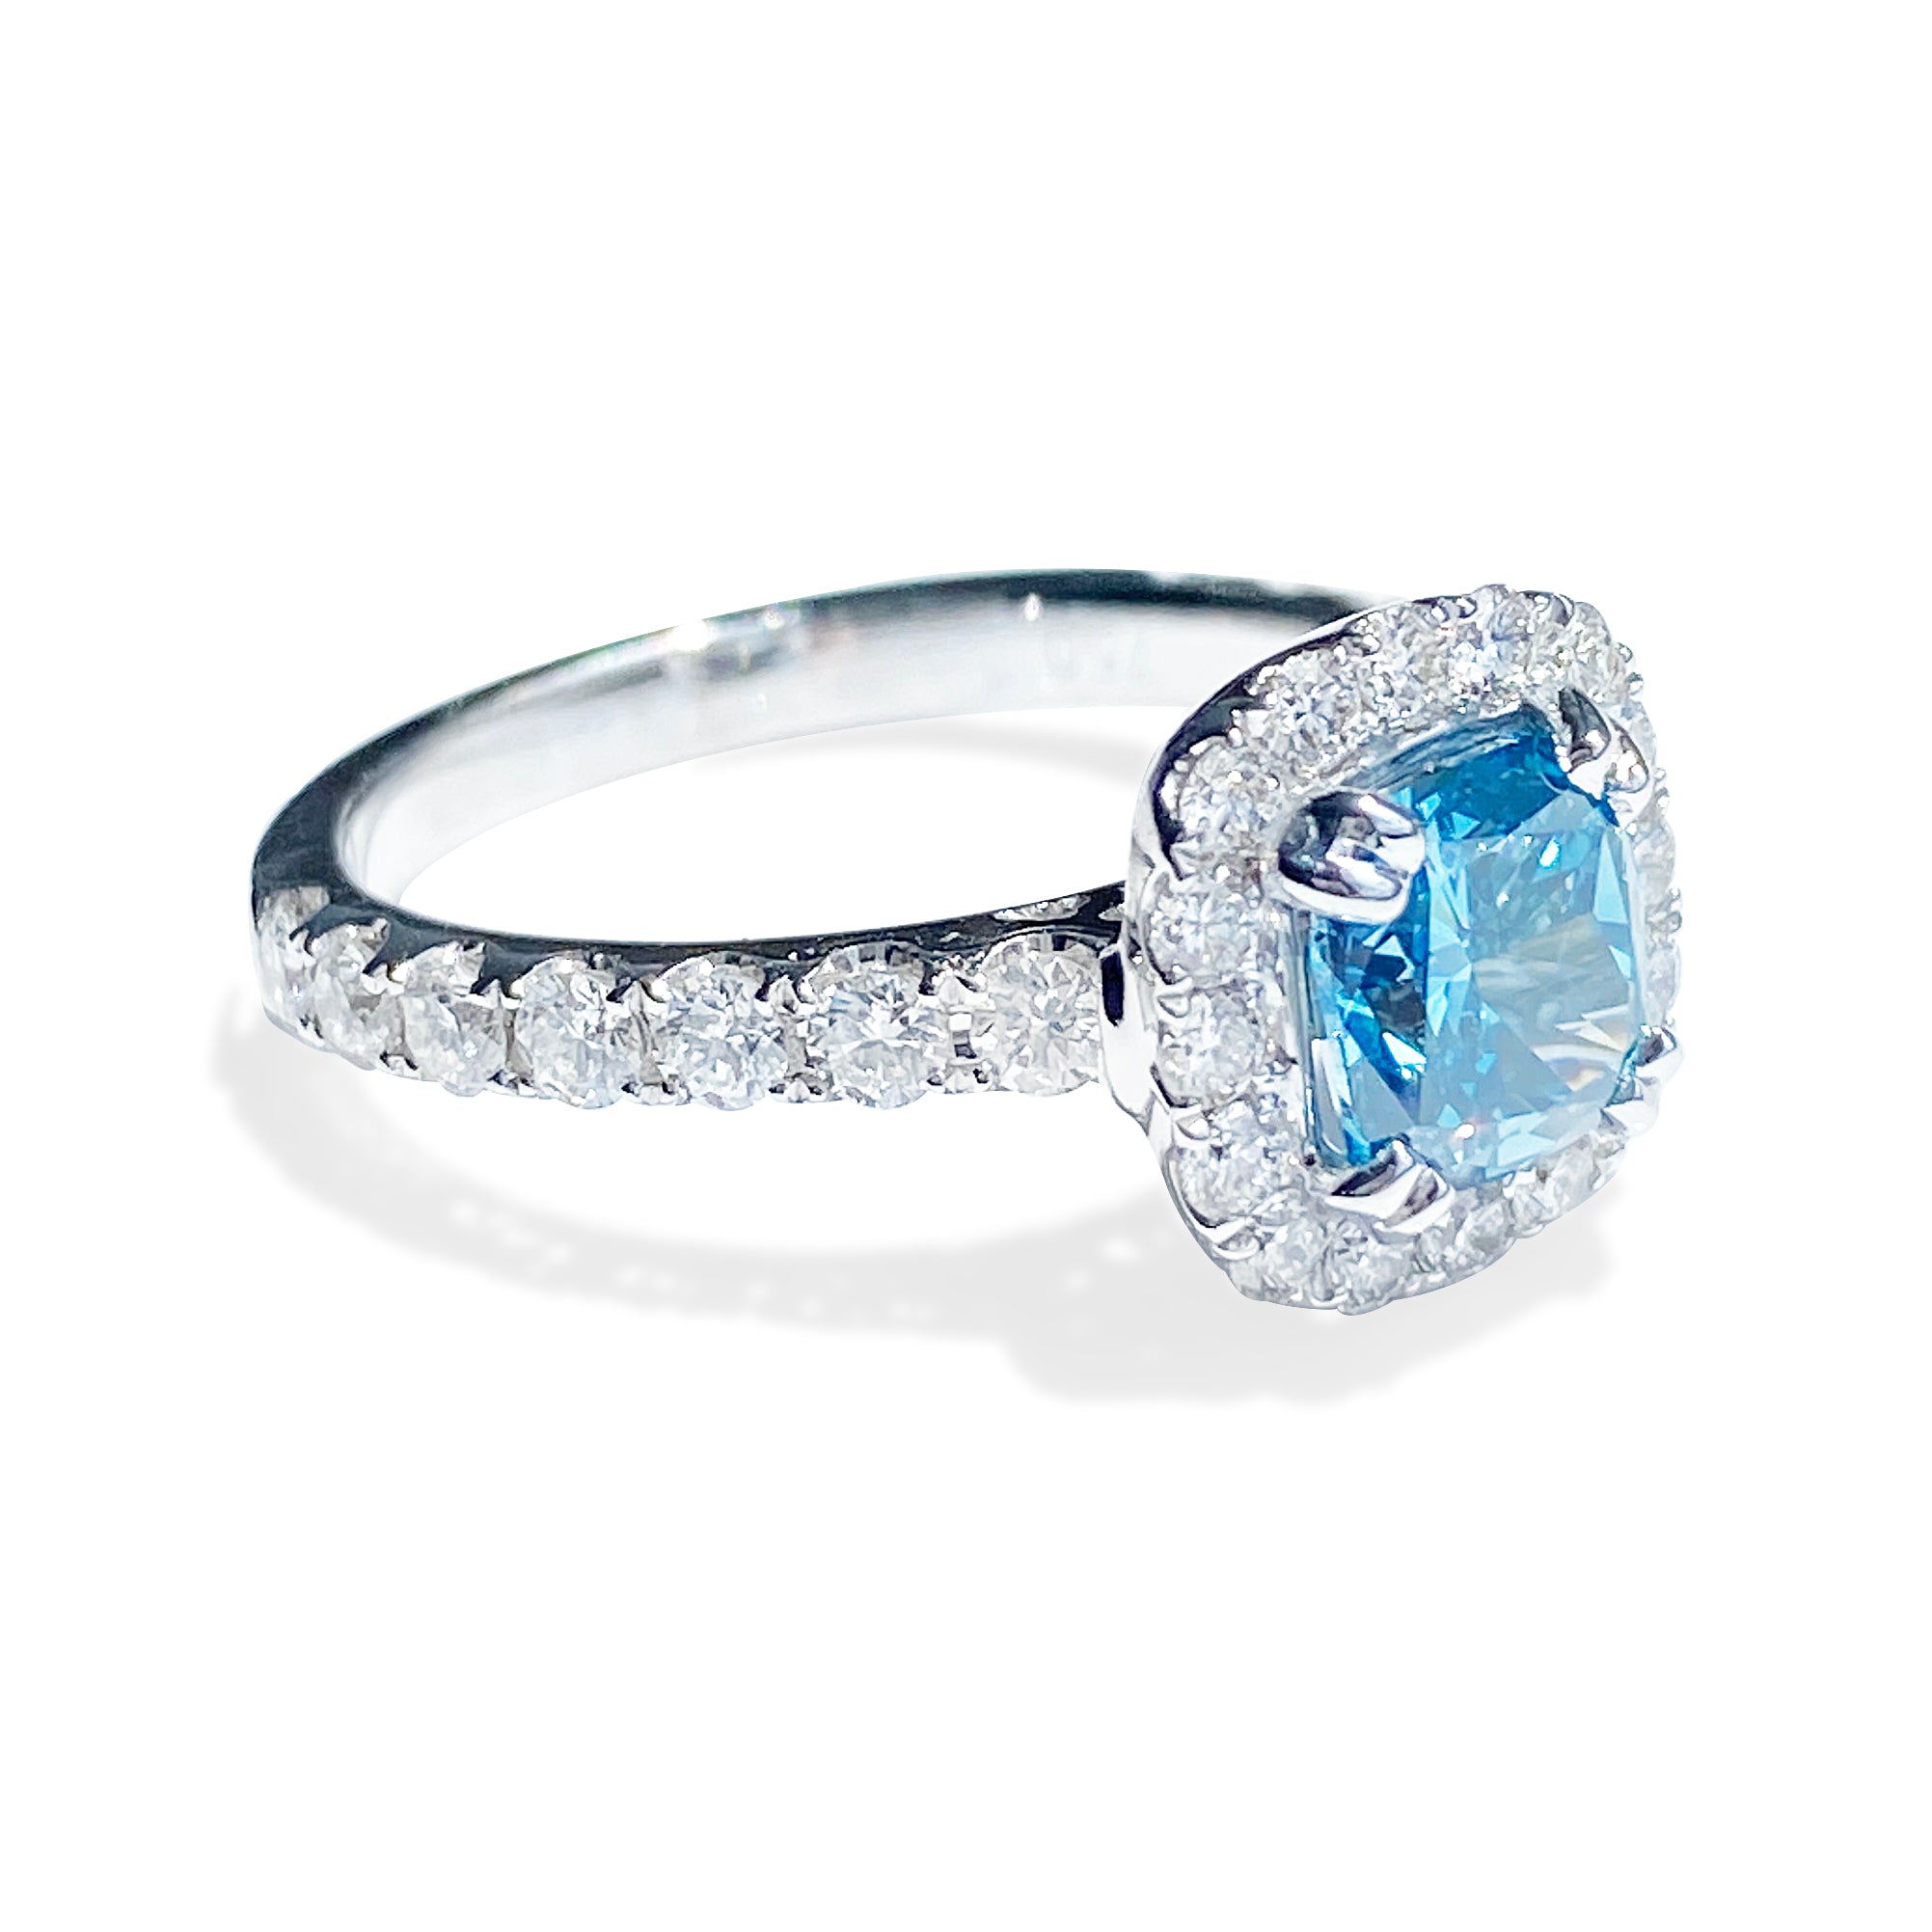 1.20 Carat Fancy Blue Cushion Diamond Halo Ring